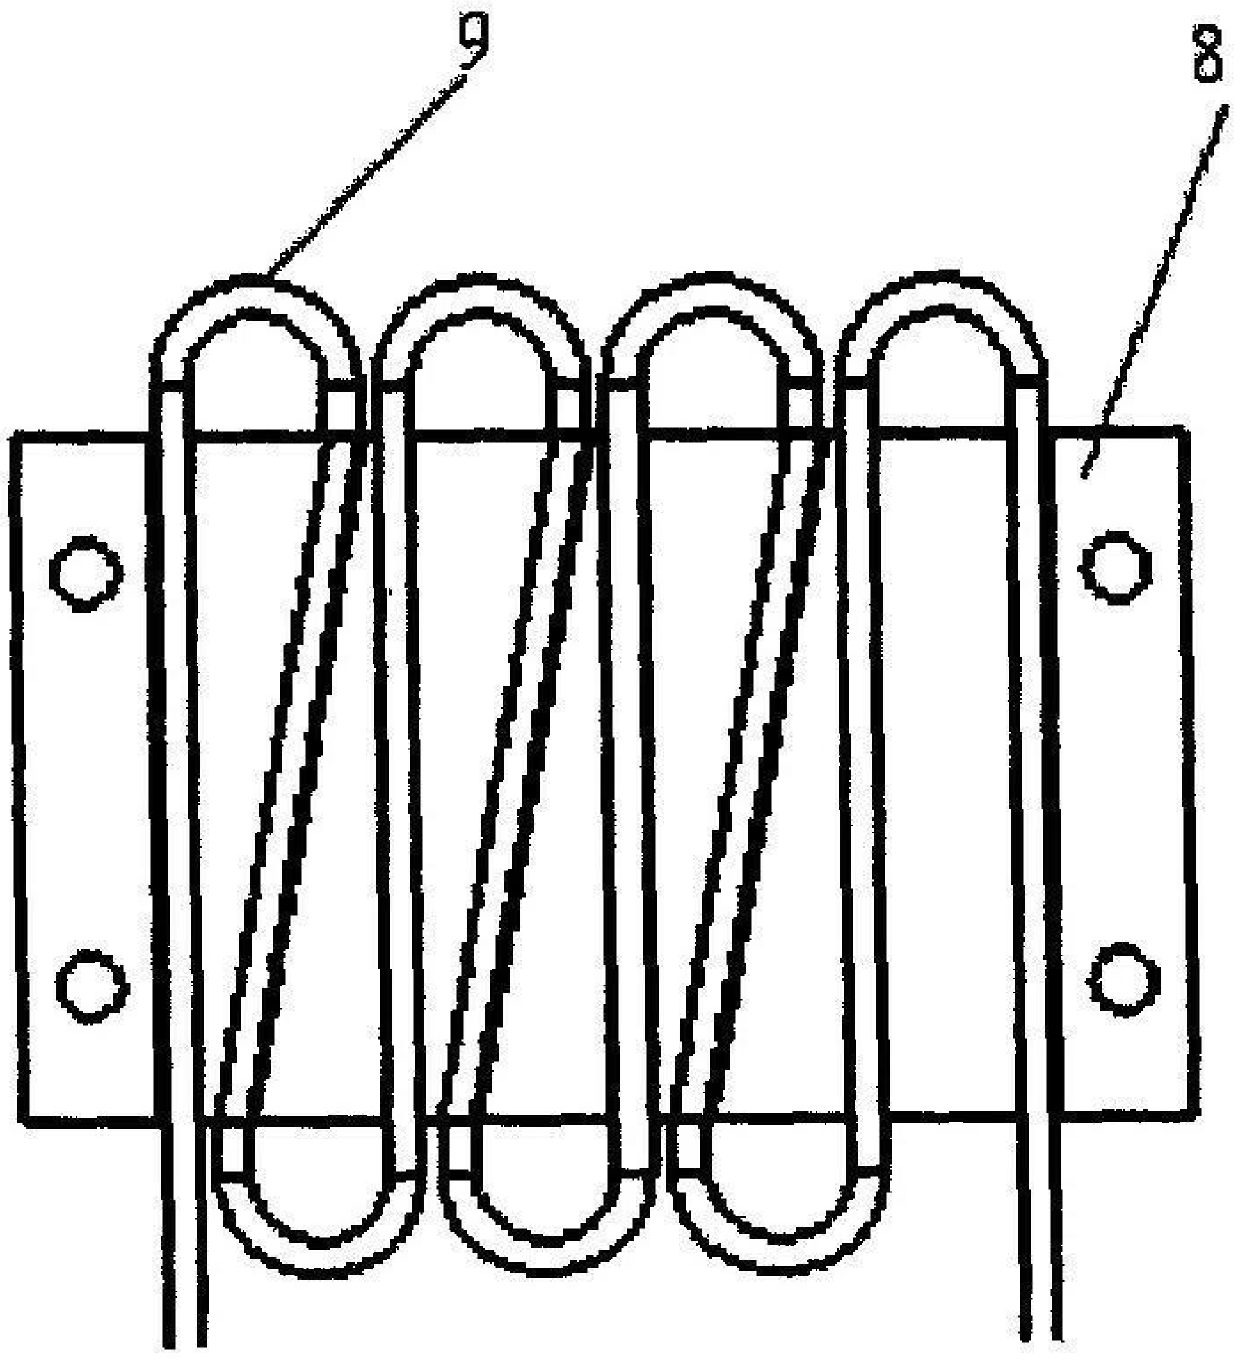 A capillary driven flat plate evaporator fluid circuit